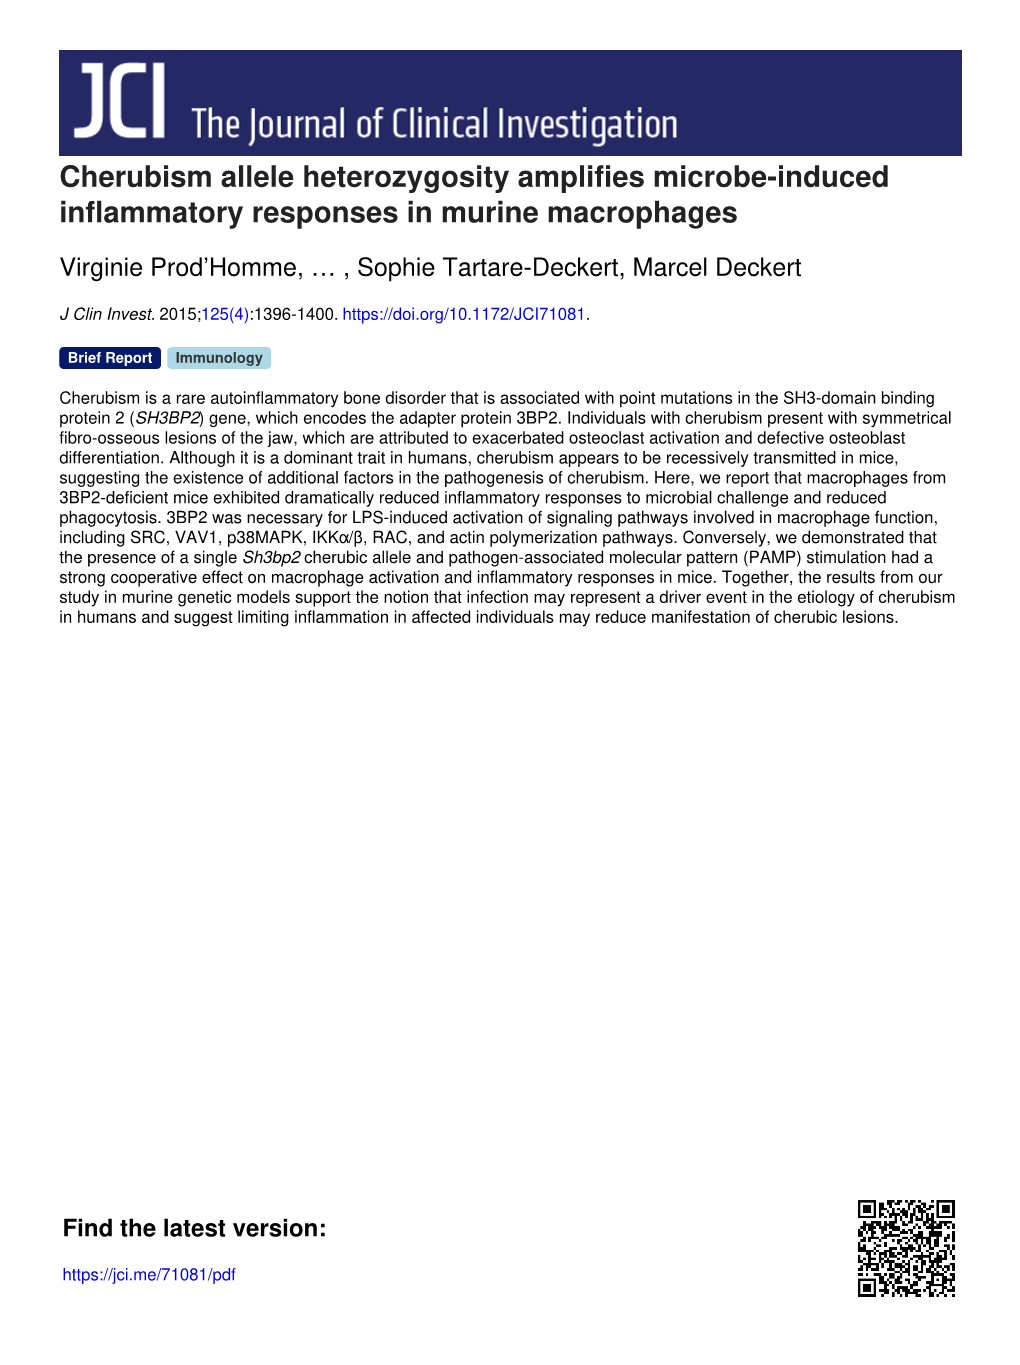 Cherubism Allele Heterozygosity Amplifies Microbe-Induced Inflammatory Responses in Murine Macrophages